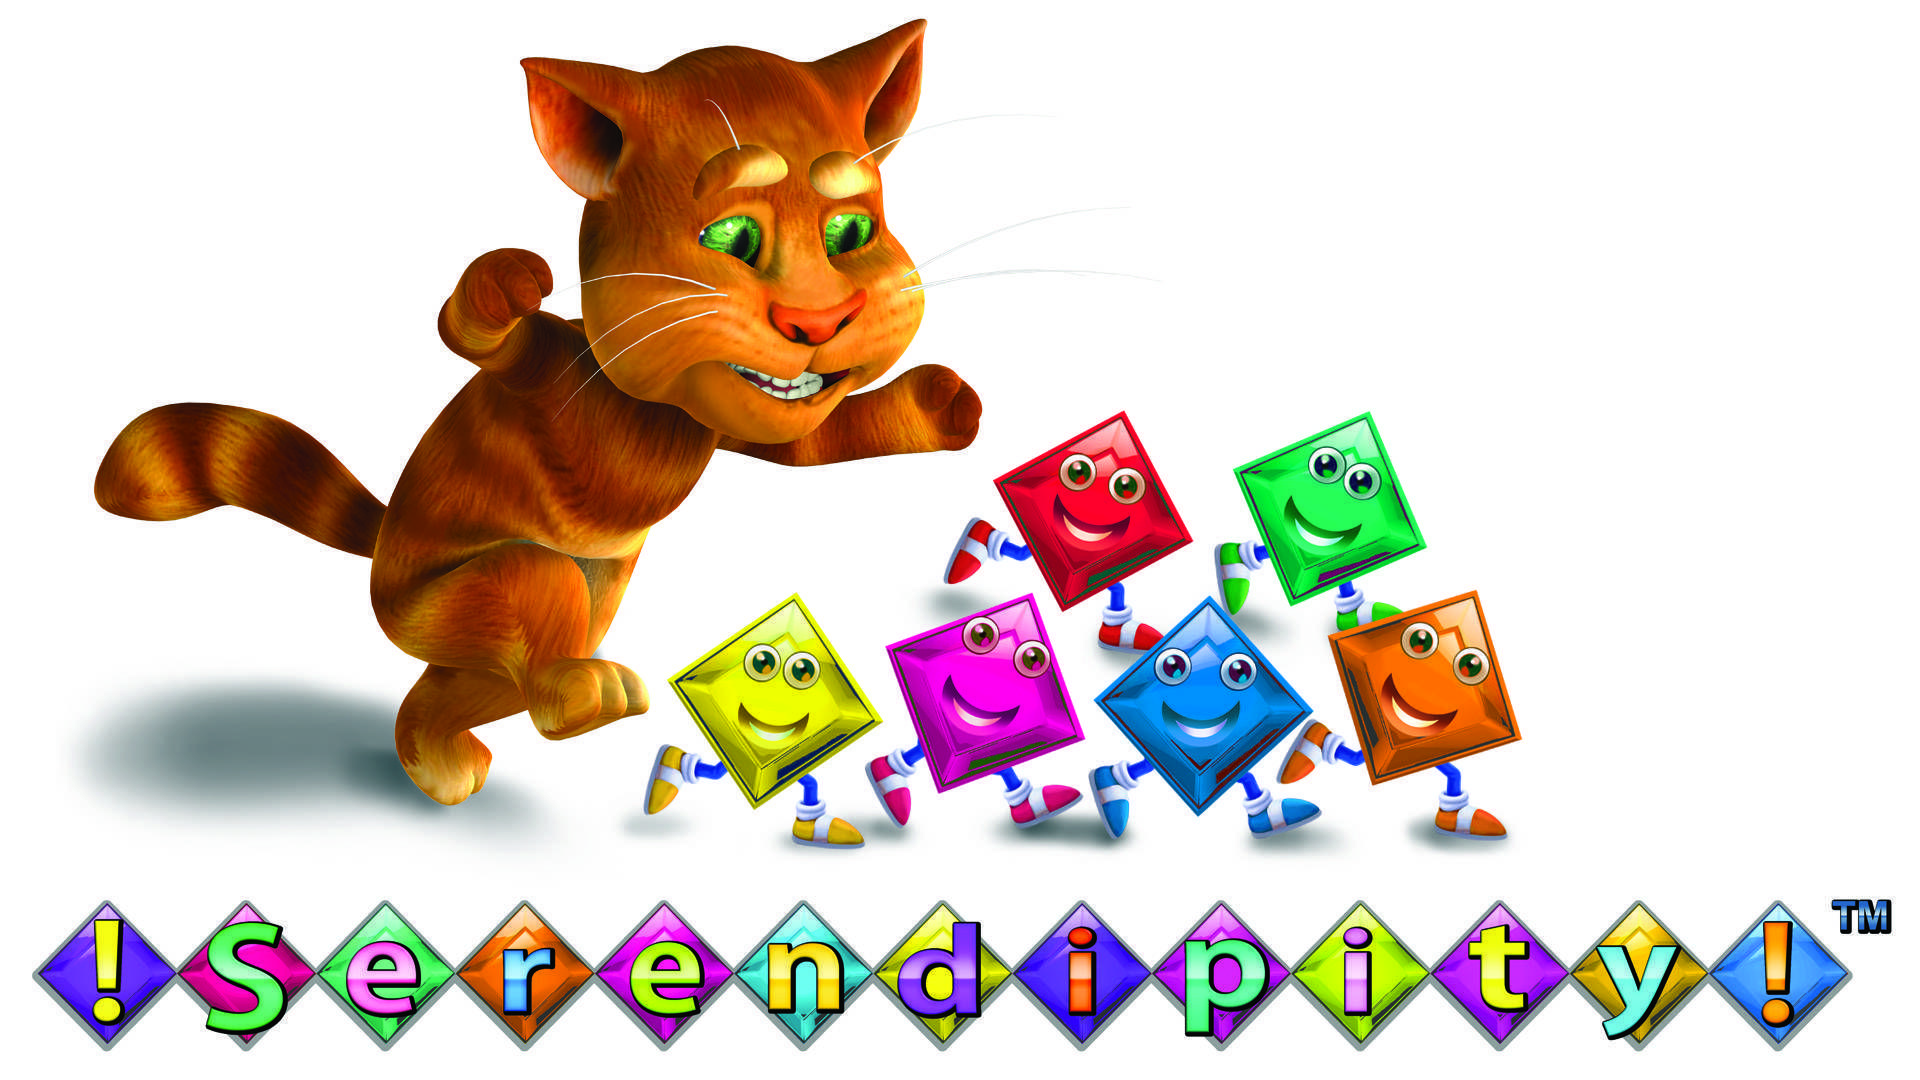 serendipity - !Serendipity! Game Downloads